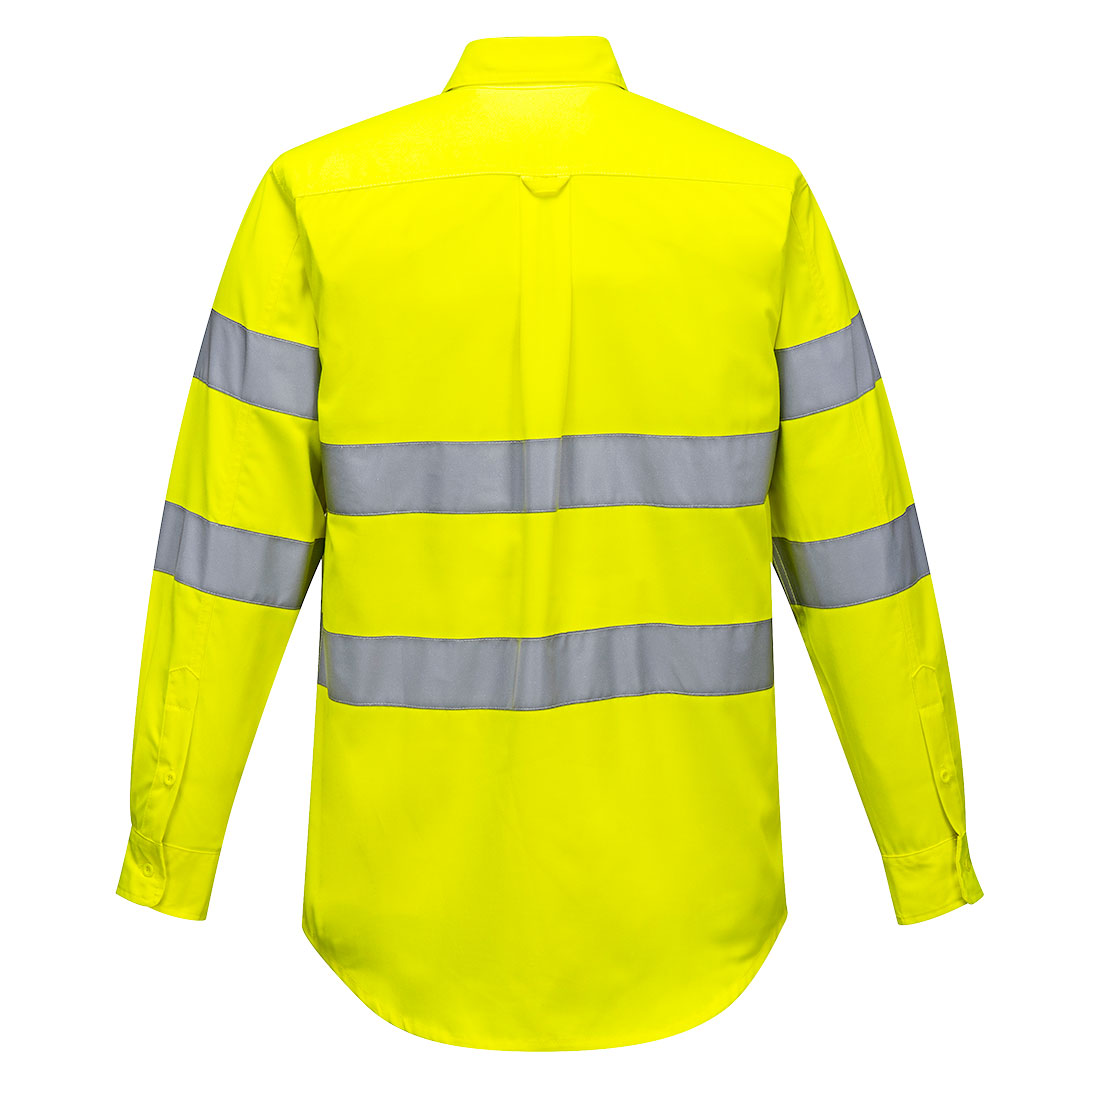 camisa-manga-larga-amarilla-alta-visibilidad-con-cinta-reflectiva-espalda-E044-cental-de-suministrosgs.jpg